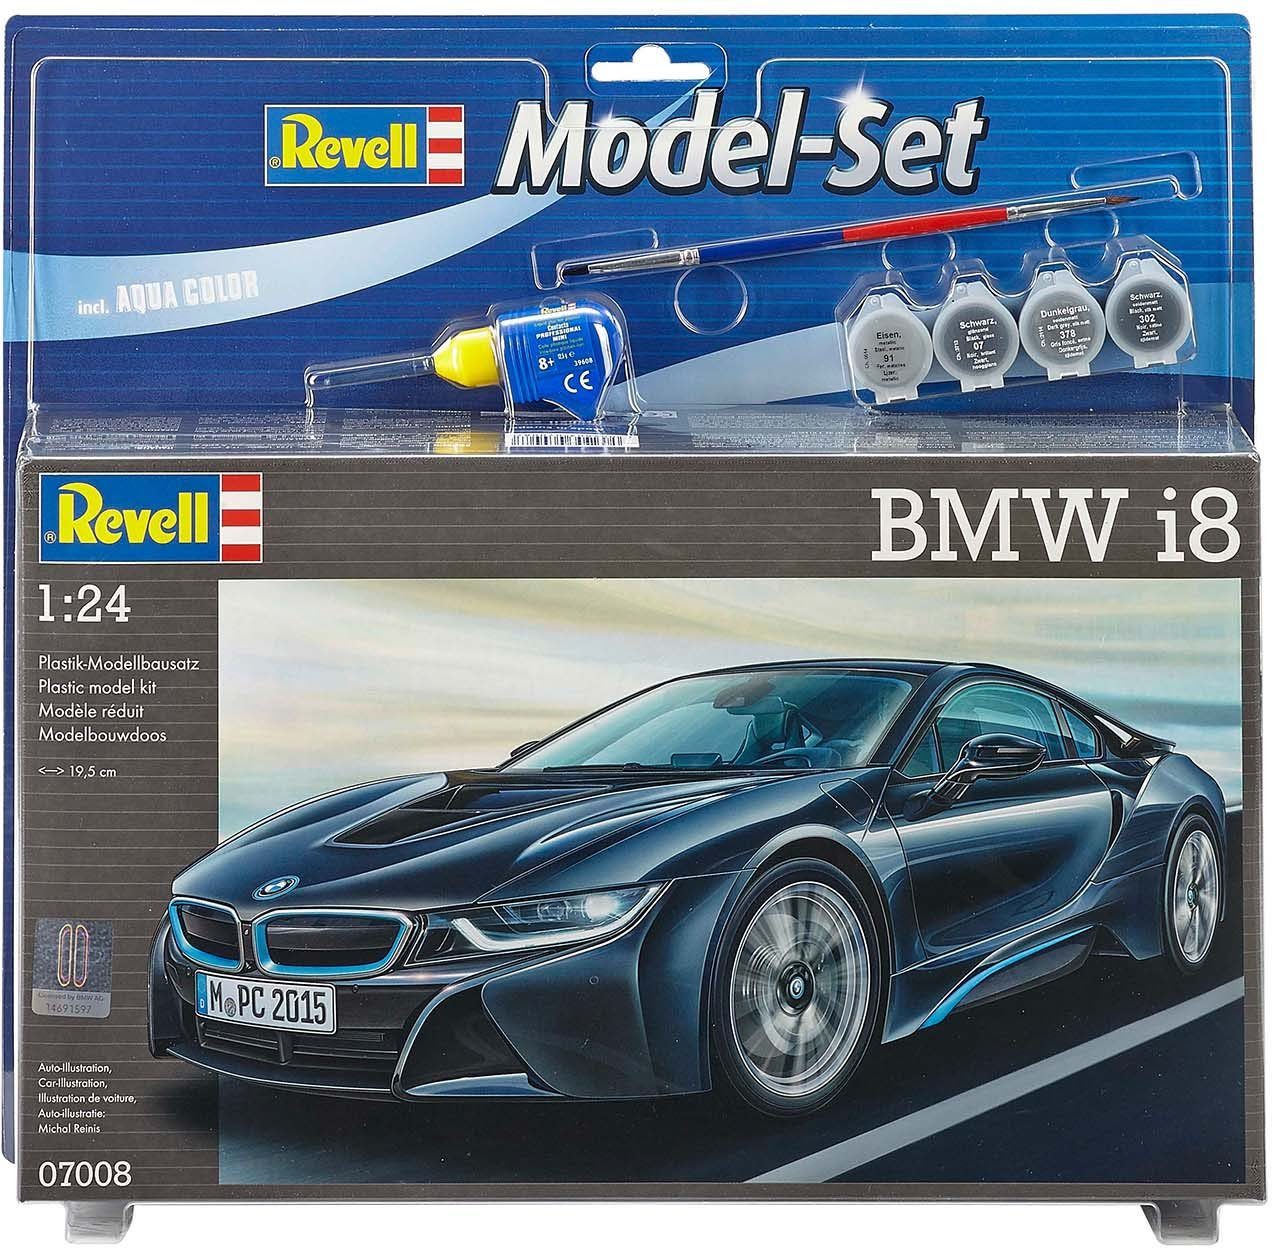 Revell® Modellbausatz Model Set BMW i8, Maßstab 1:24, Made in Europe,  Modell Set mit Zubehör